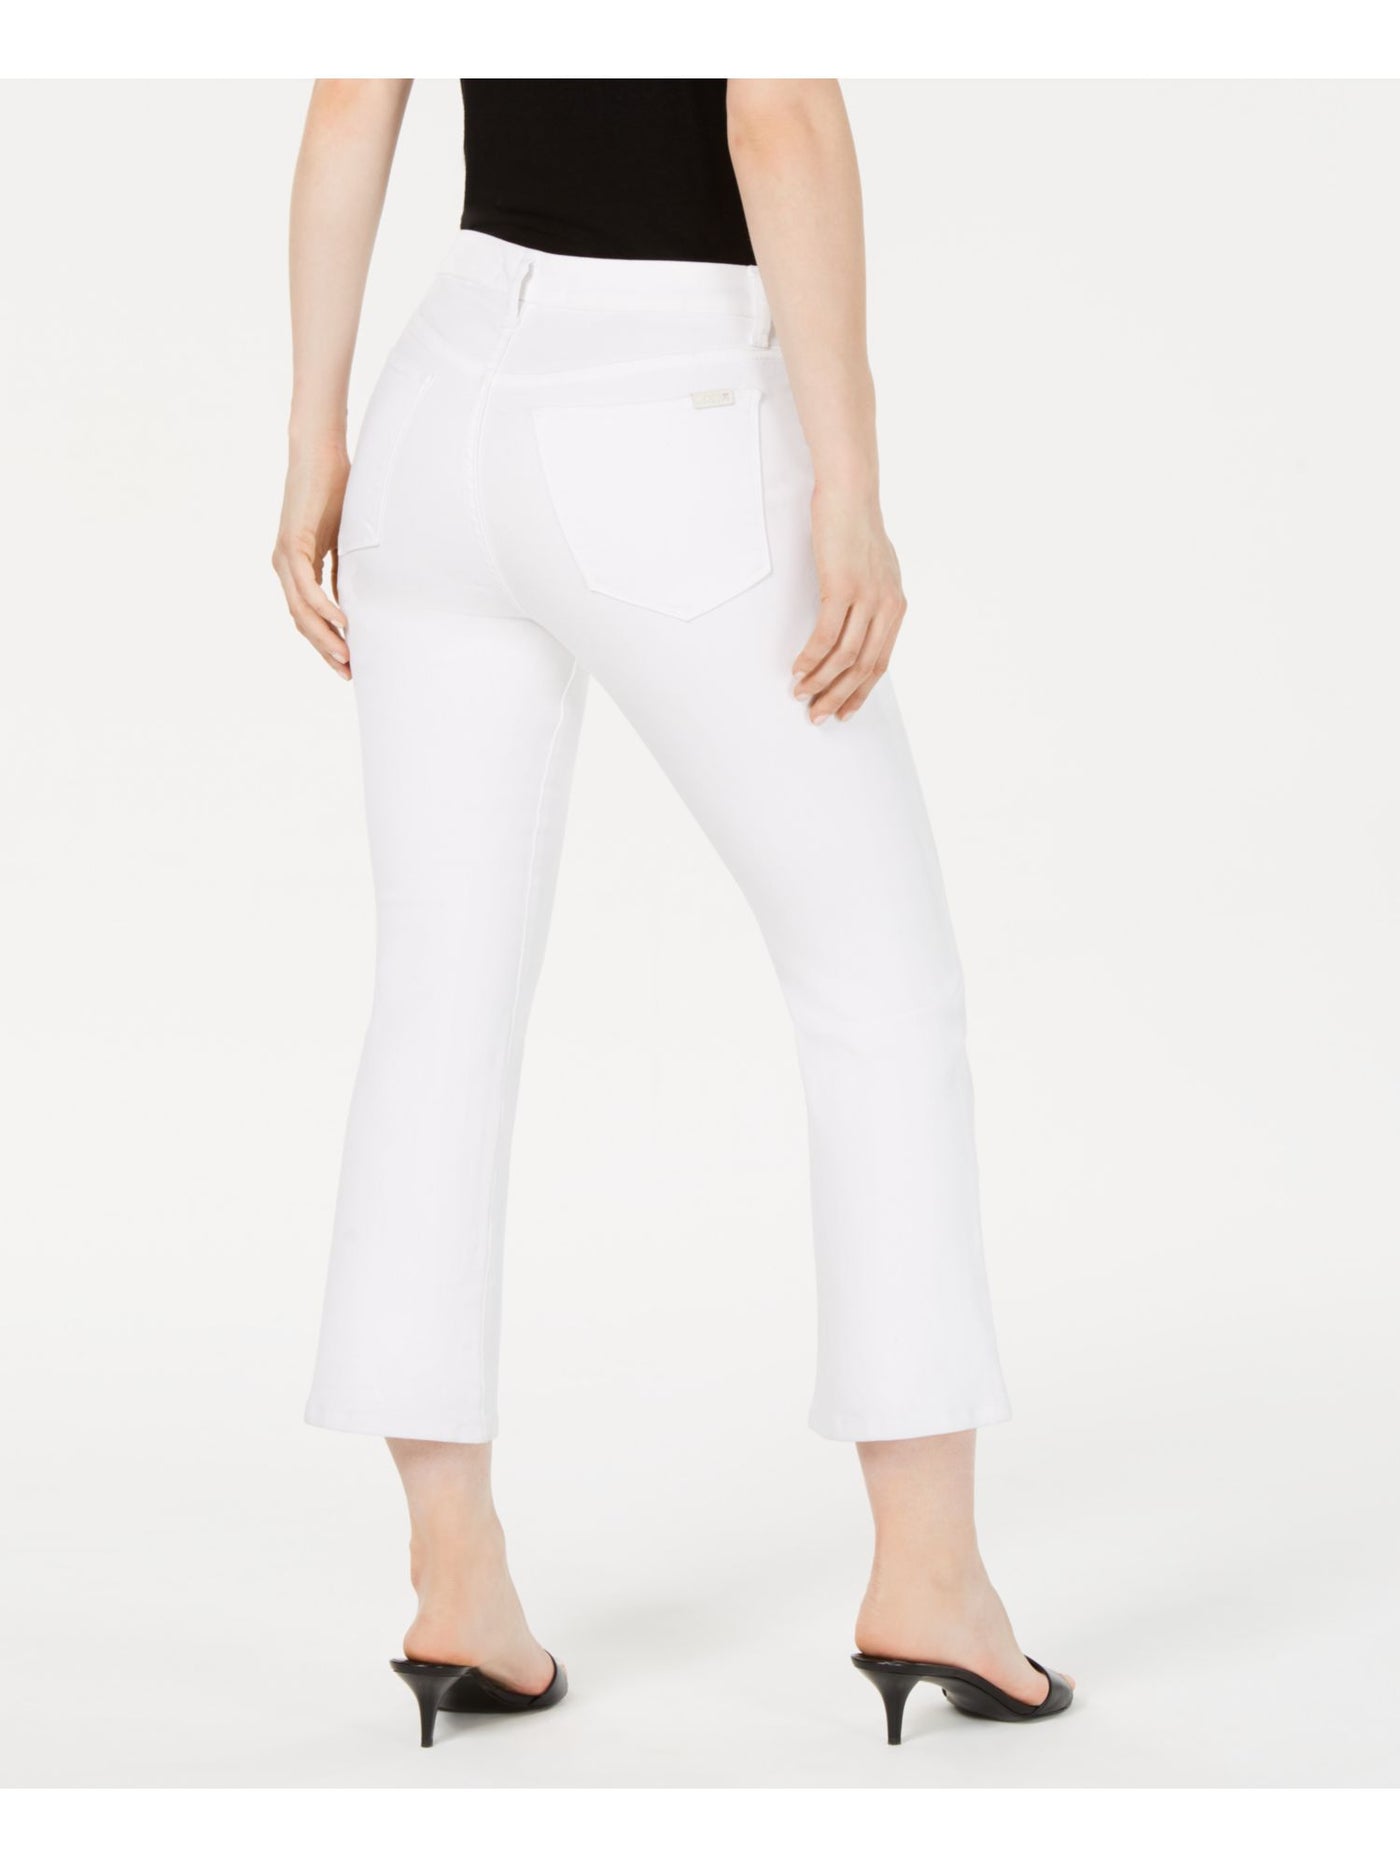 JOE'S Womens White Jeans 32 Waist